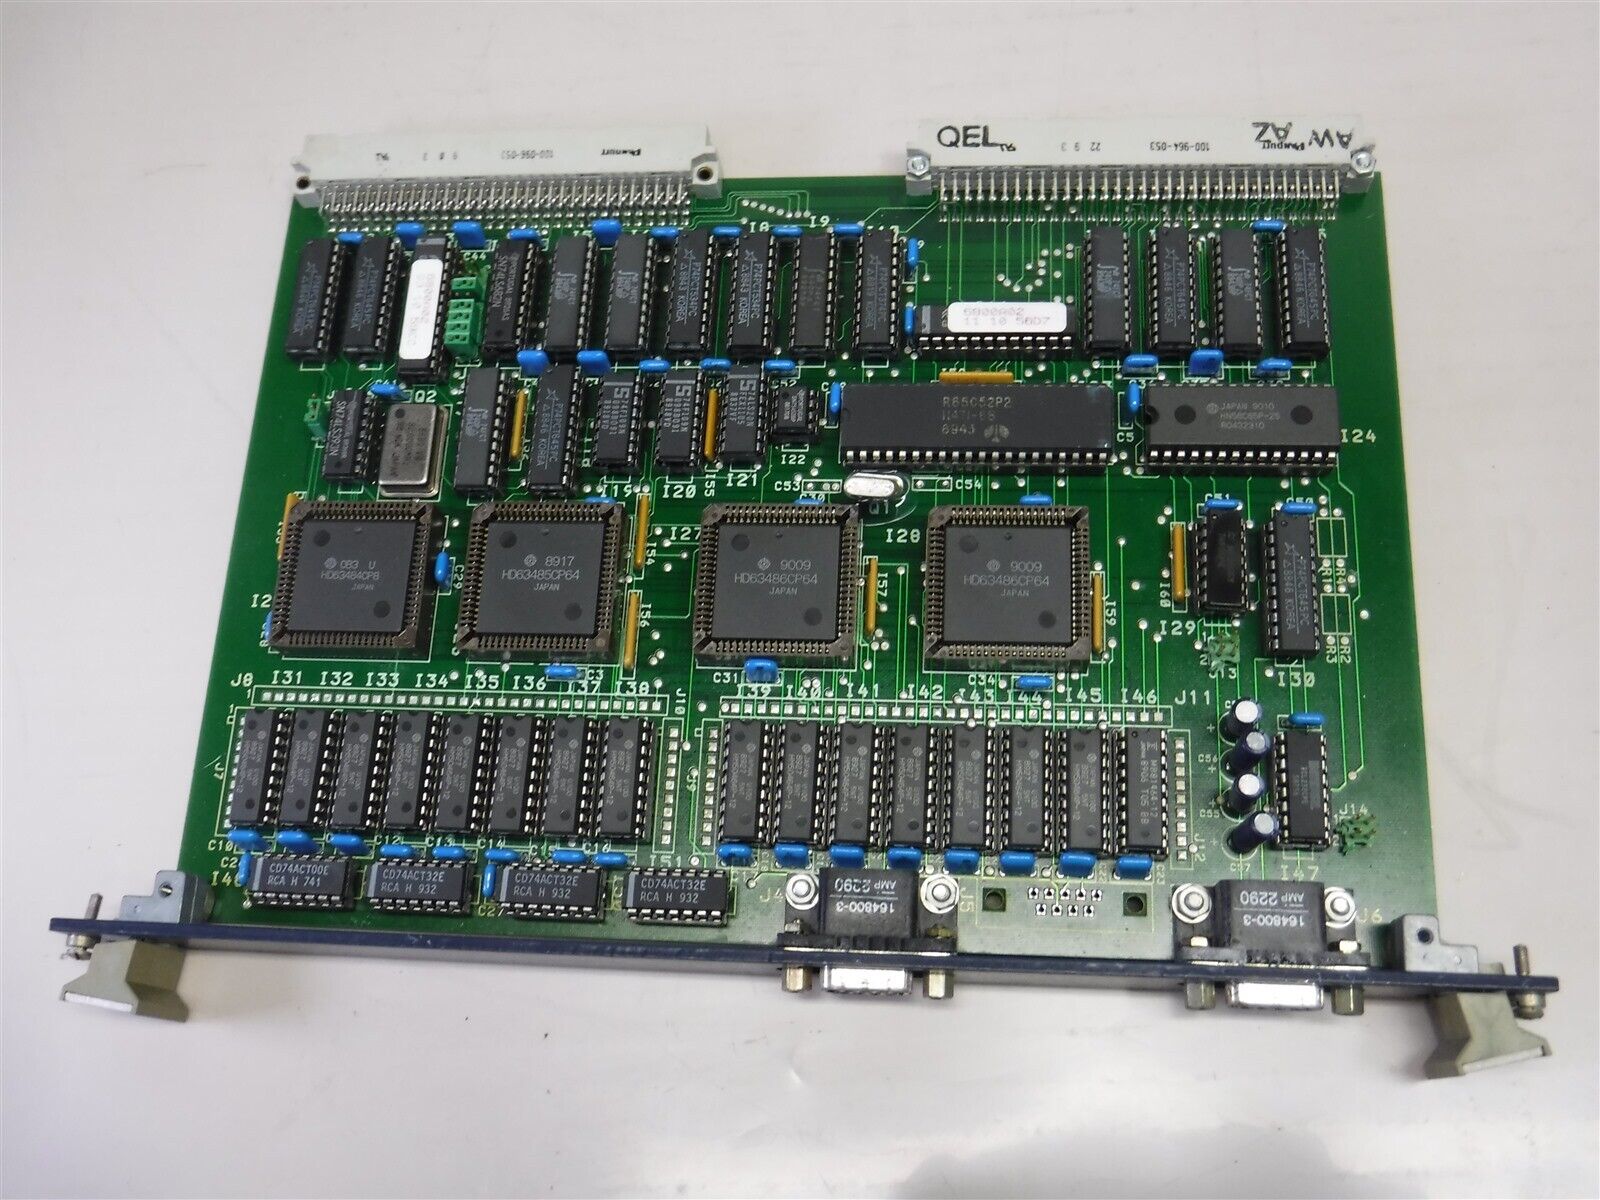 Used AVL Graphic Control Board/Card 6800A02 Rev 2 W6